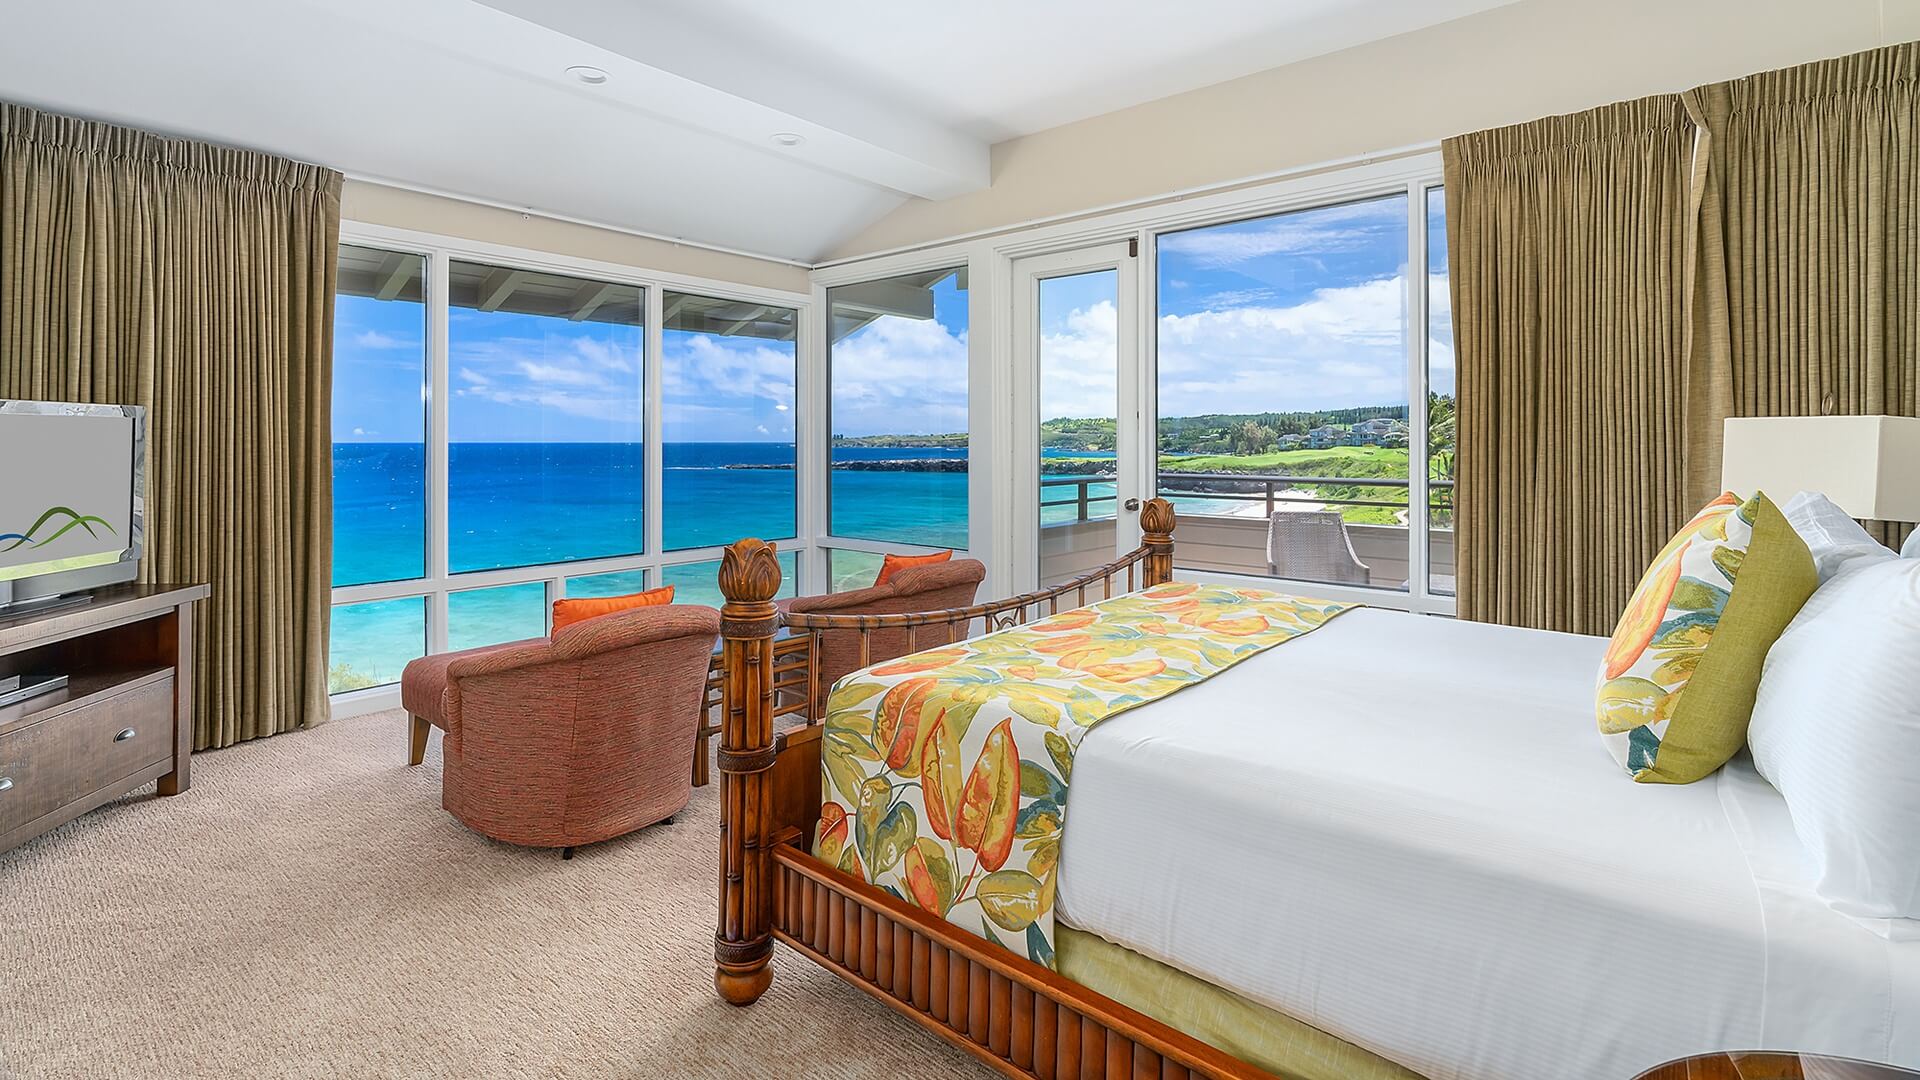 The panoramic ocean views in the bedroom of Kapalua Bay Villa 21G5